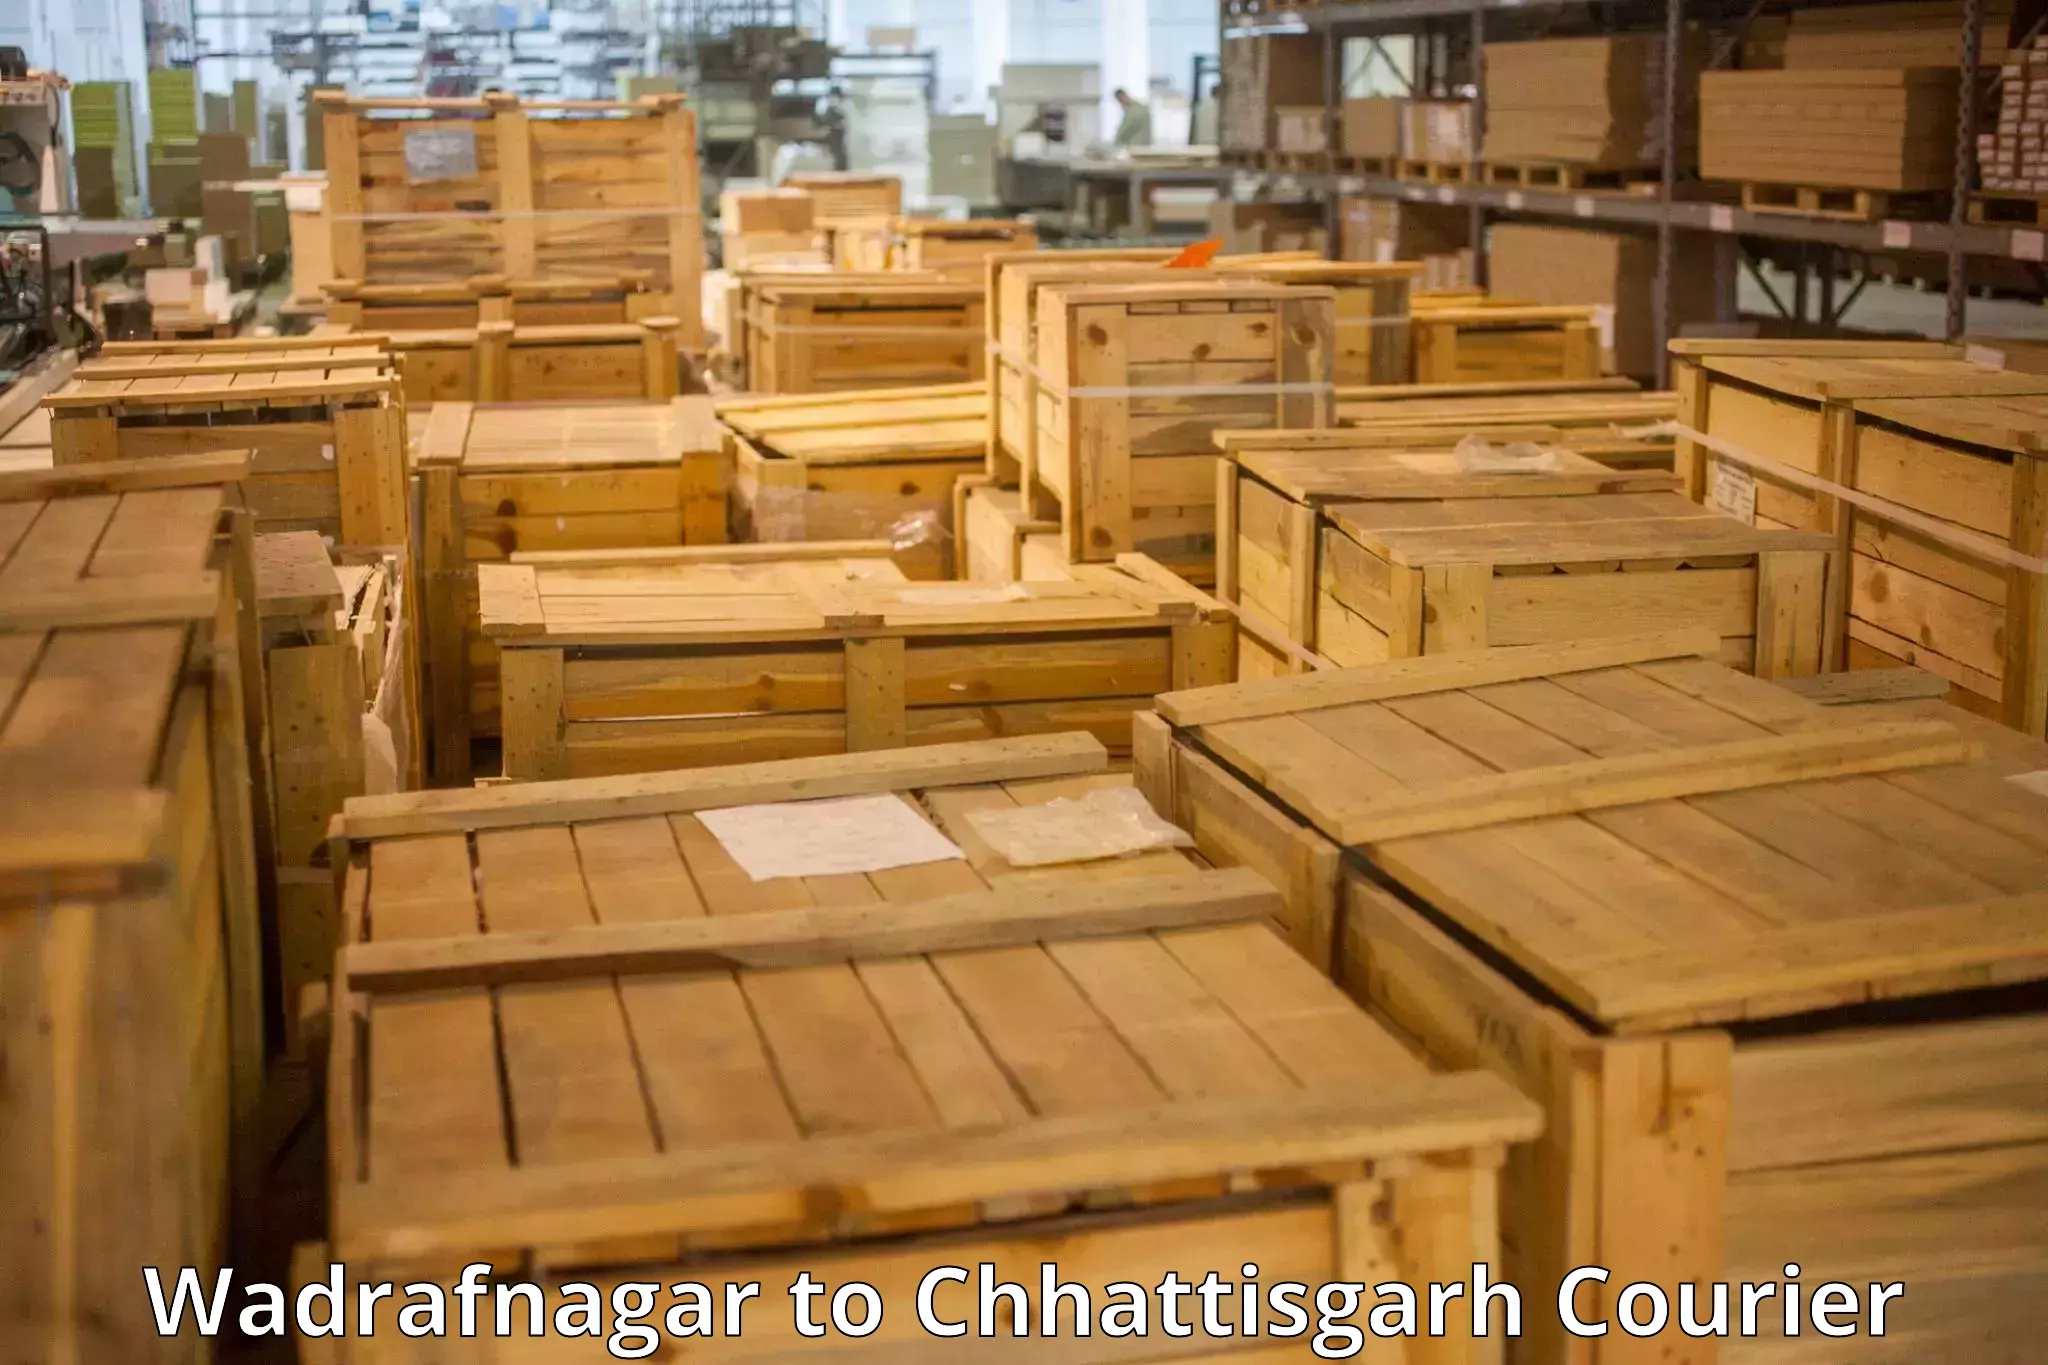 Baggage relocation service Wadrafnagar to Jaijaipur